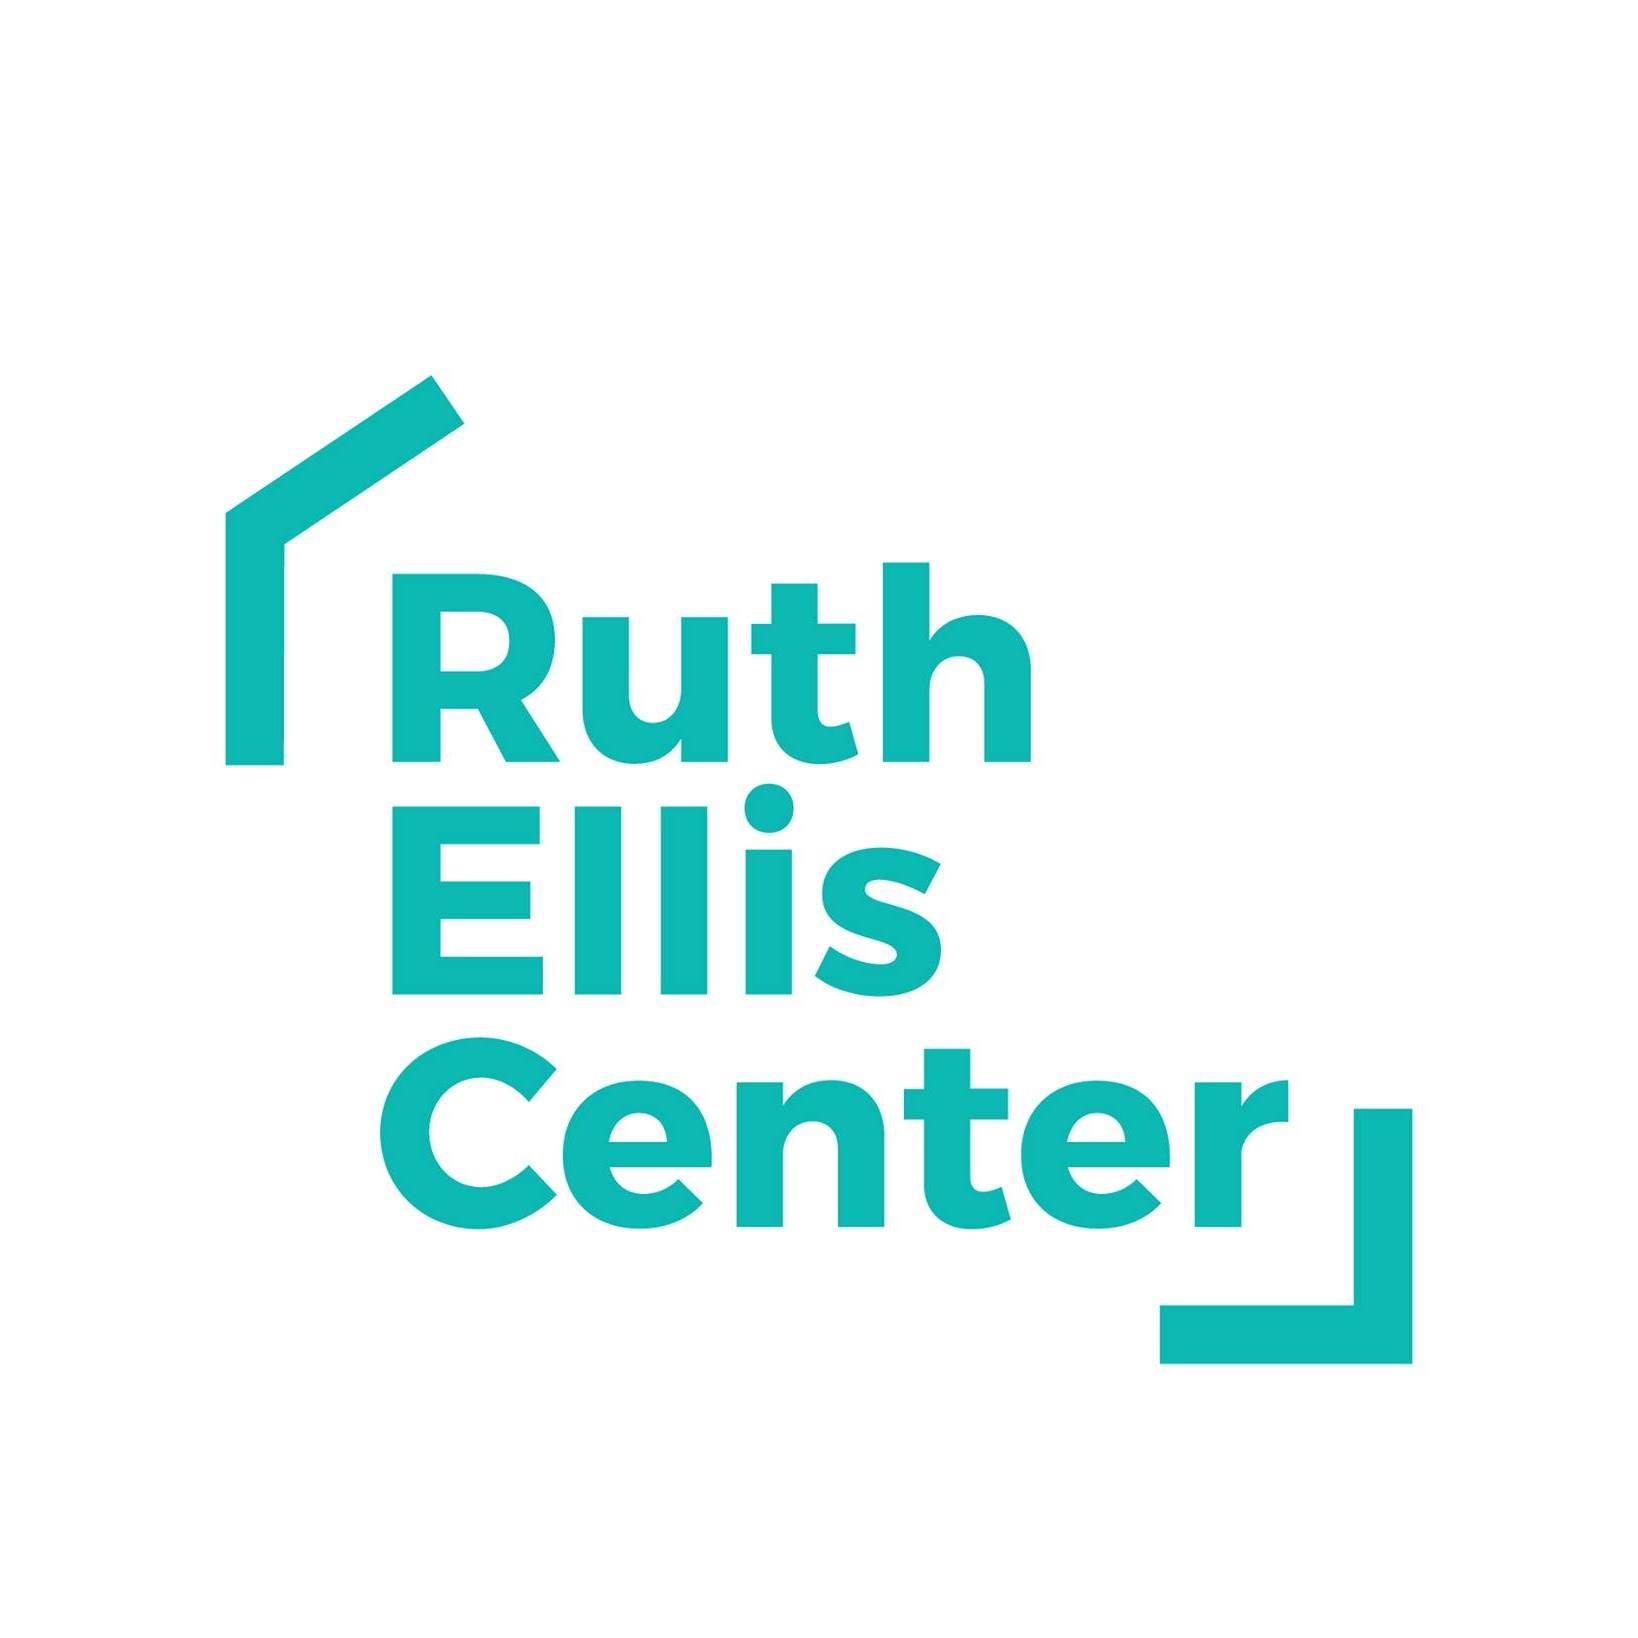 LGBTQ Organization in Detroit Michigan - Ruth Ellis Center